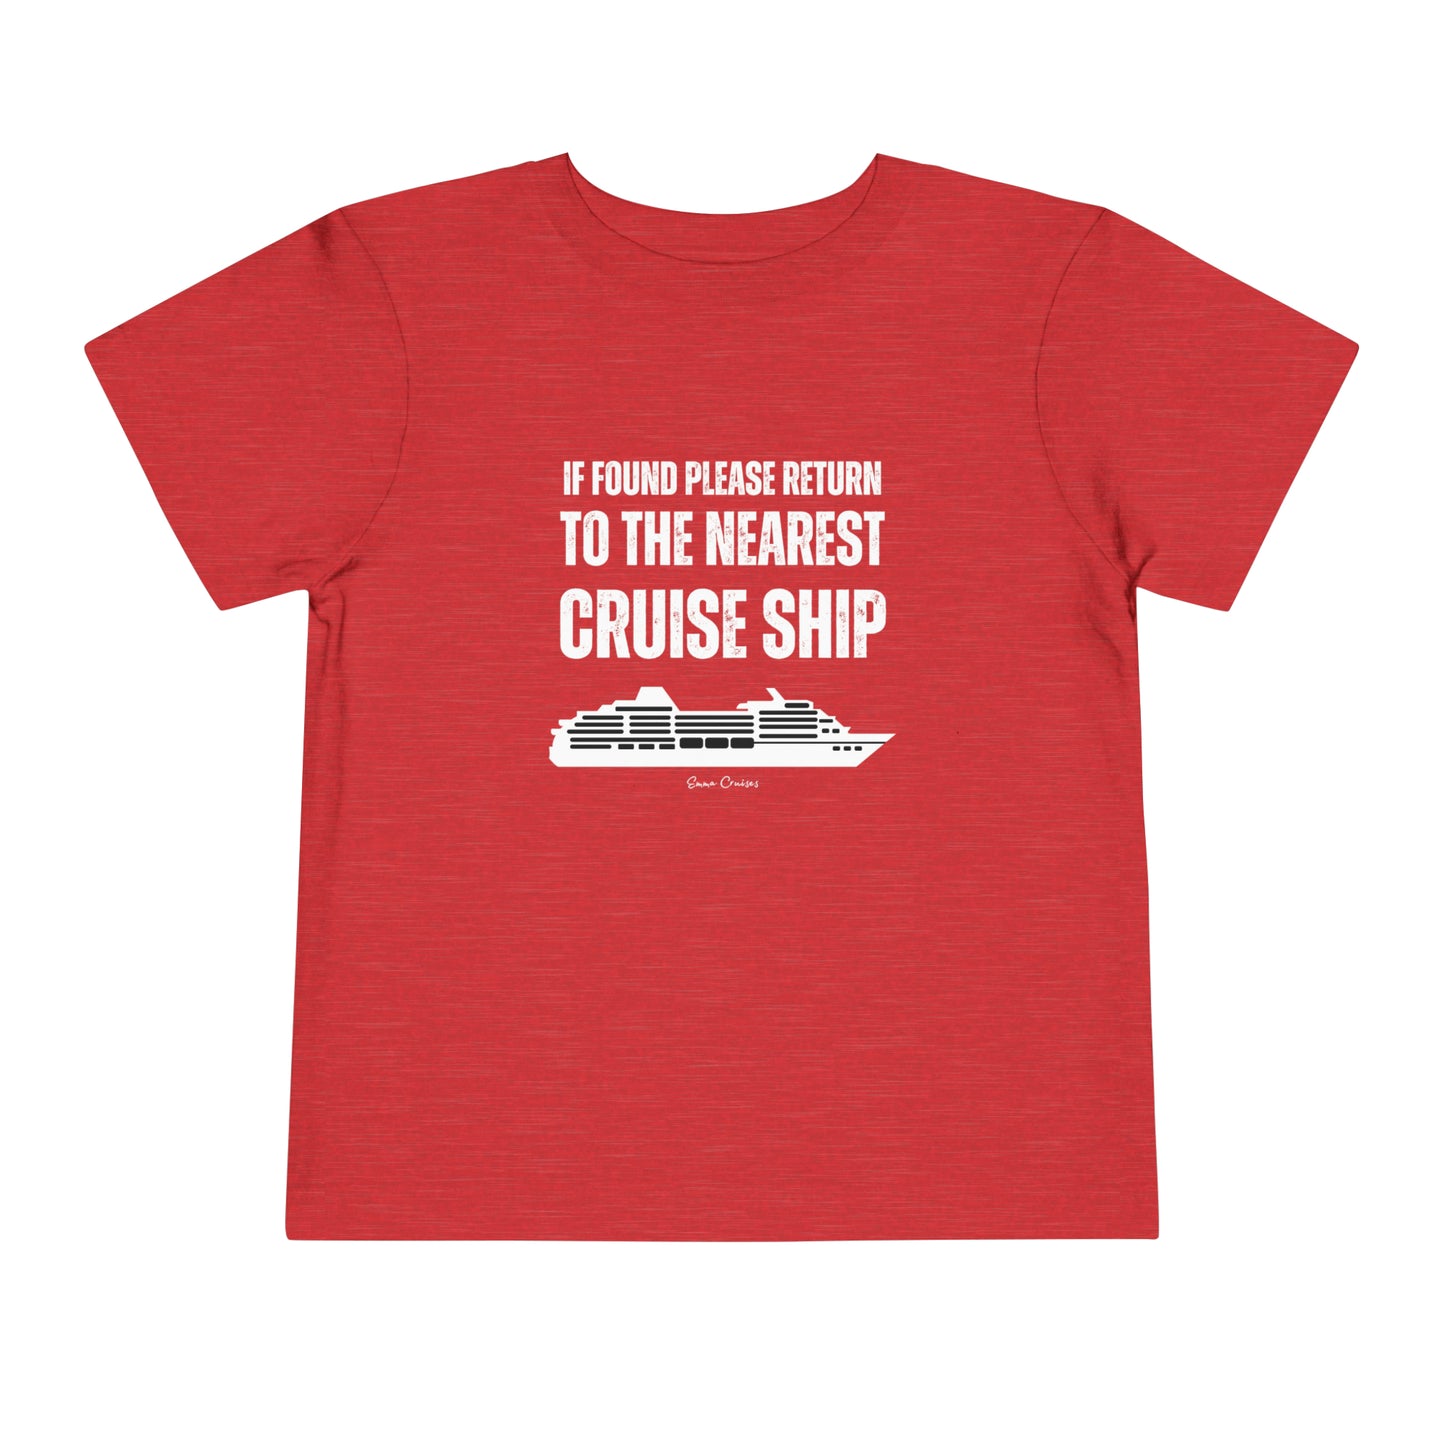 Return to Cruise Ship - Toddler UNISEX T-Shirt